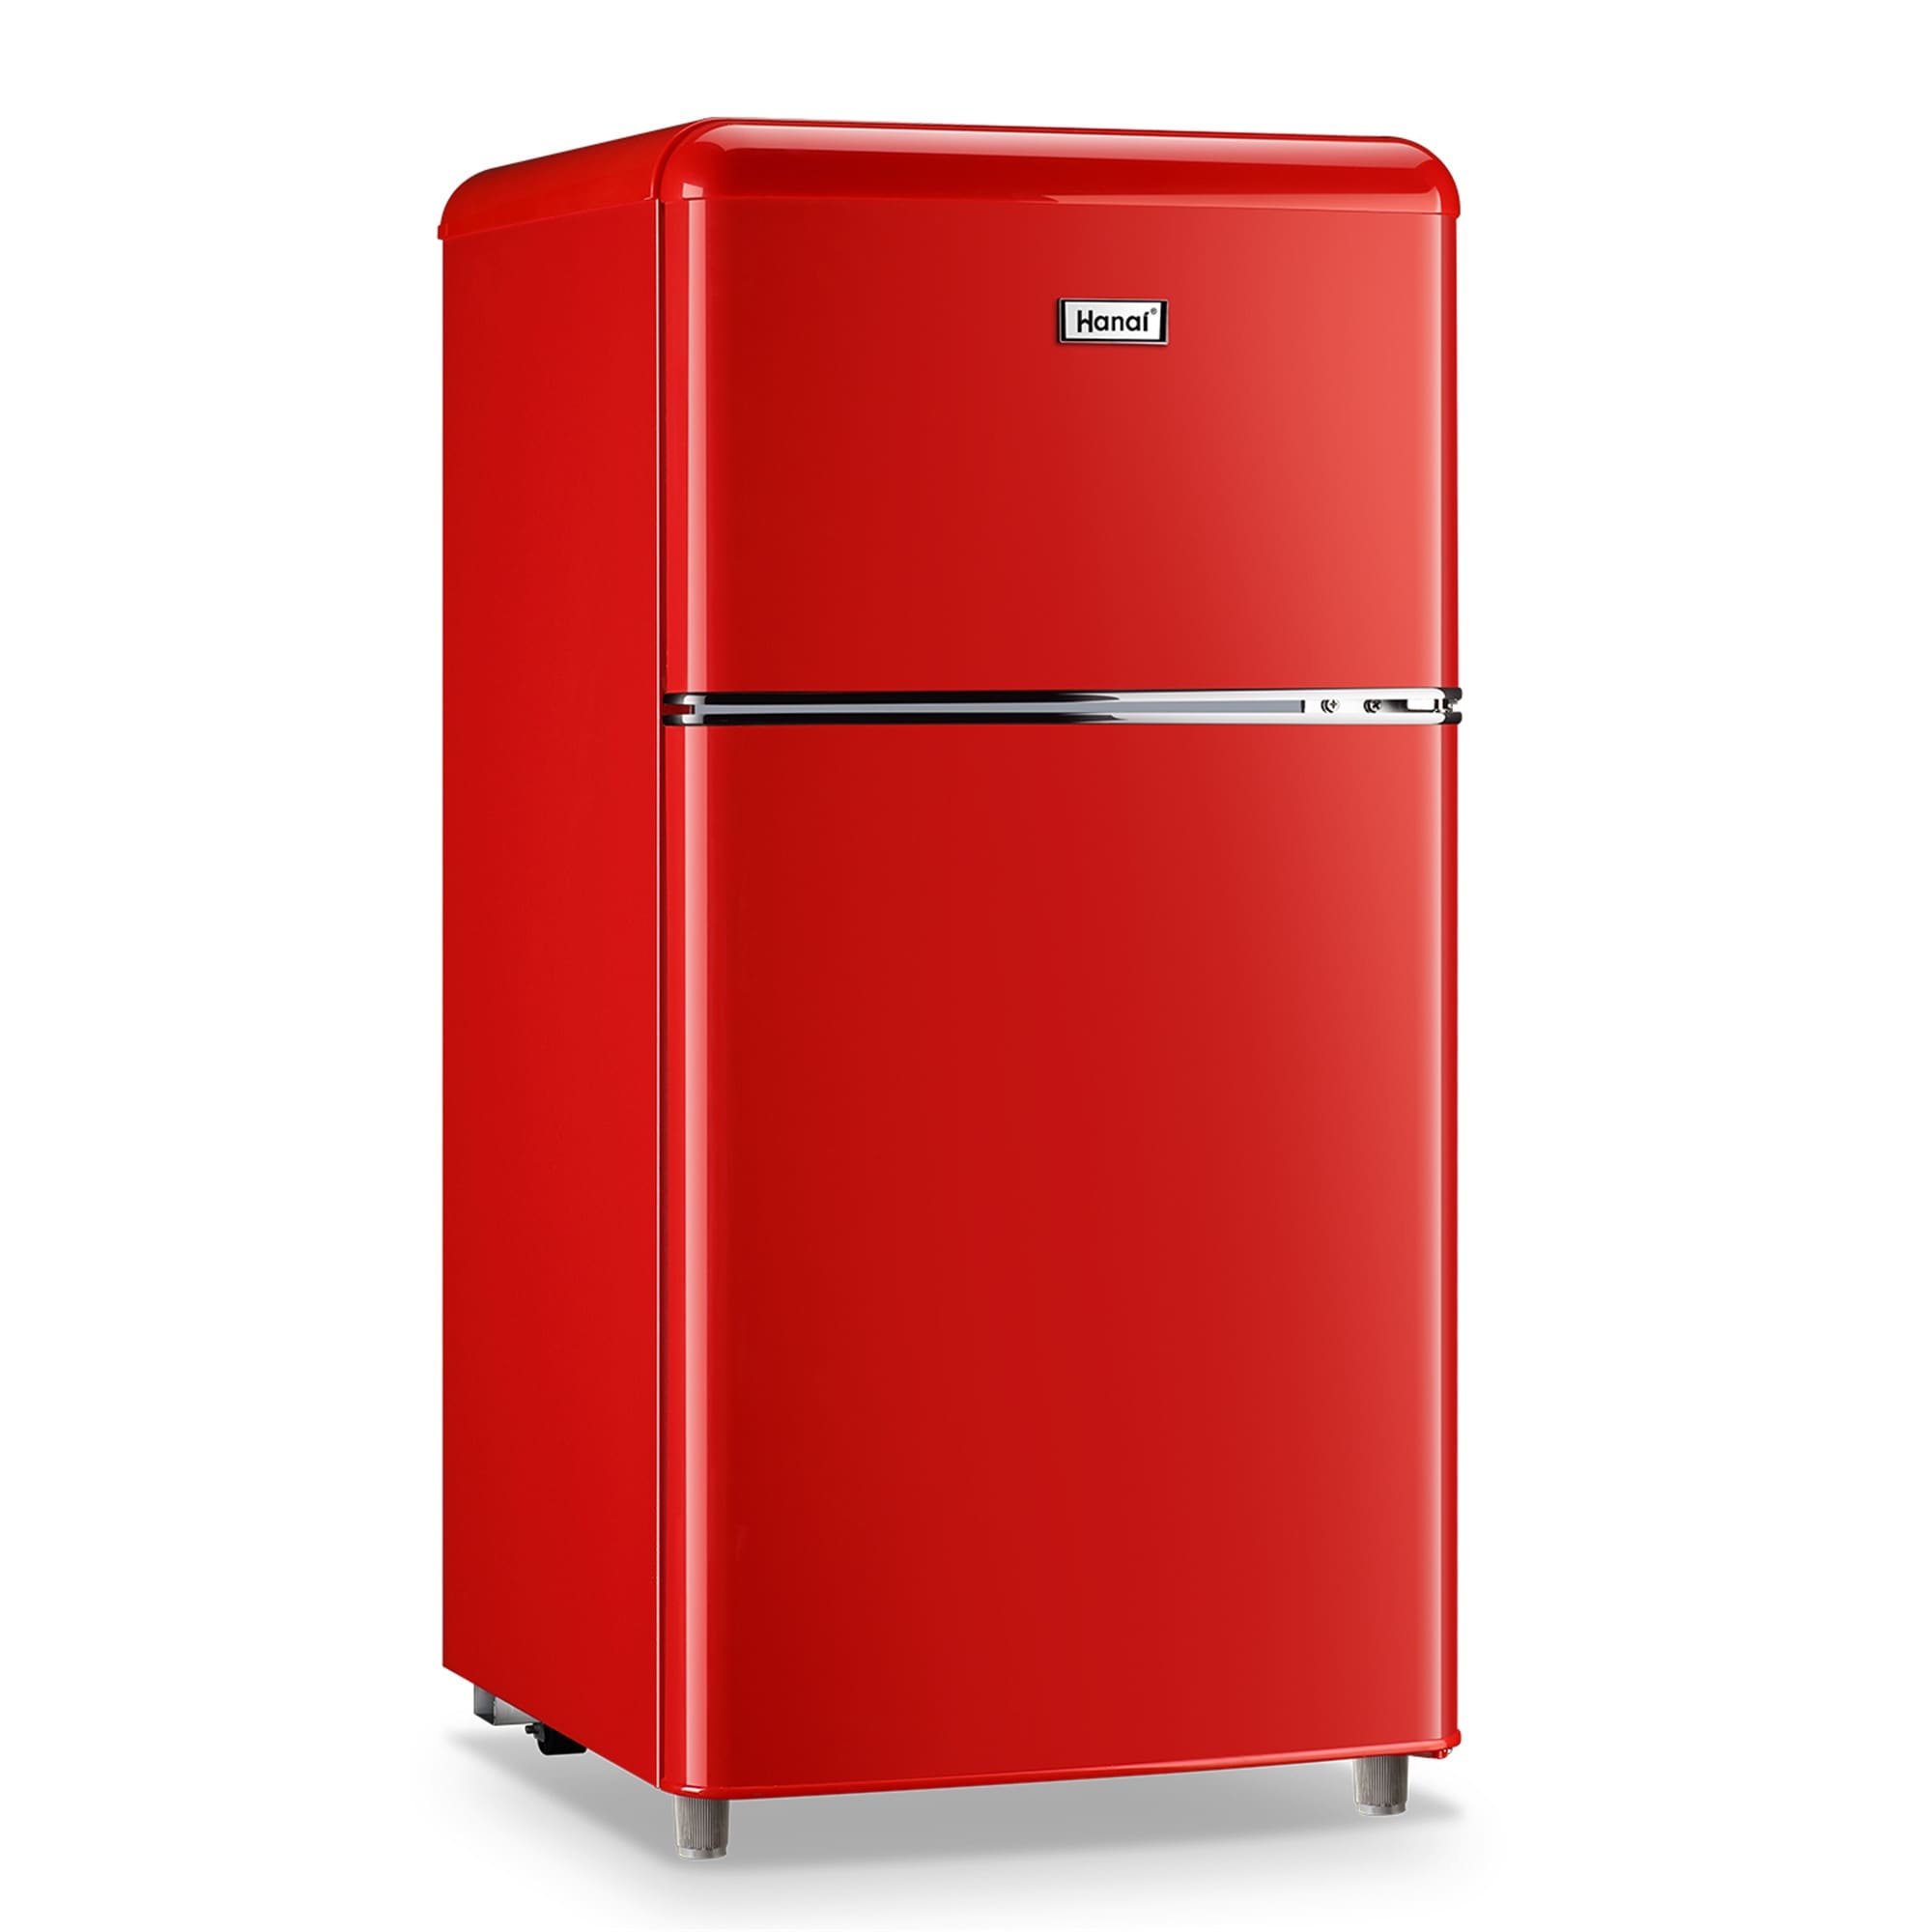 Wanai Compact Refrigerator 3.2 CU.FT Retro White Fridge with Freezer 2 Door Mini Refrigerator with 7 Temp Modes, Removable Shelves, LED Lights, Ideal